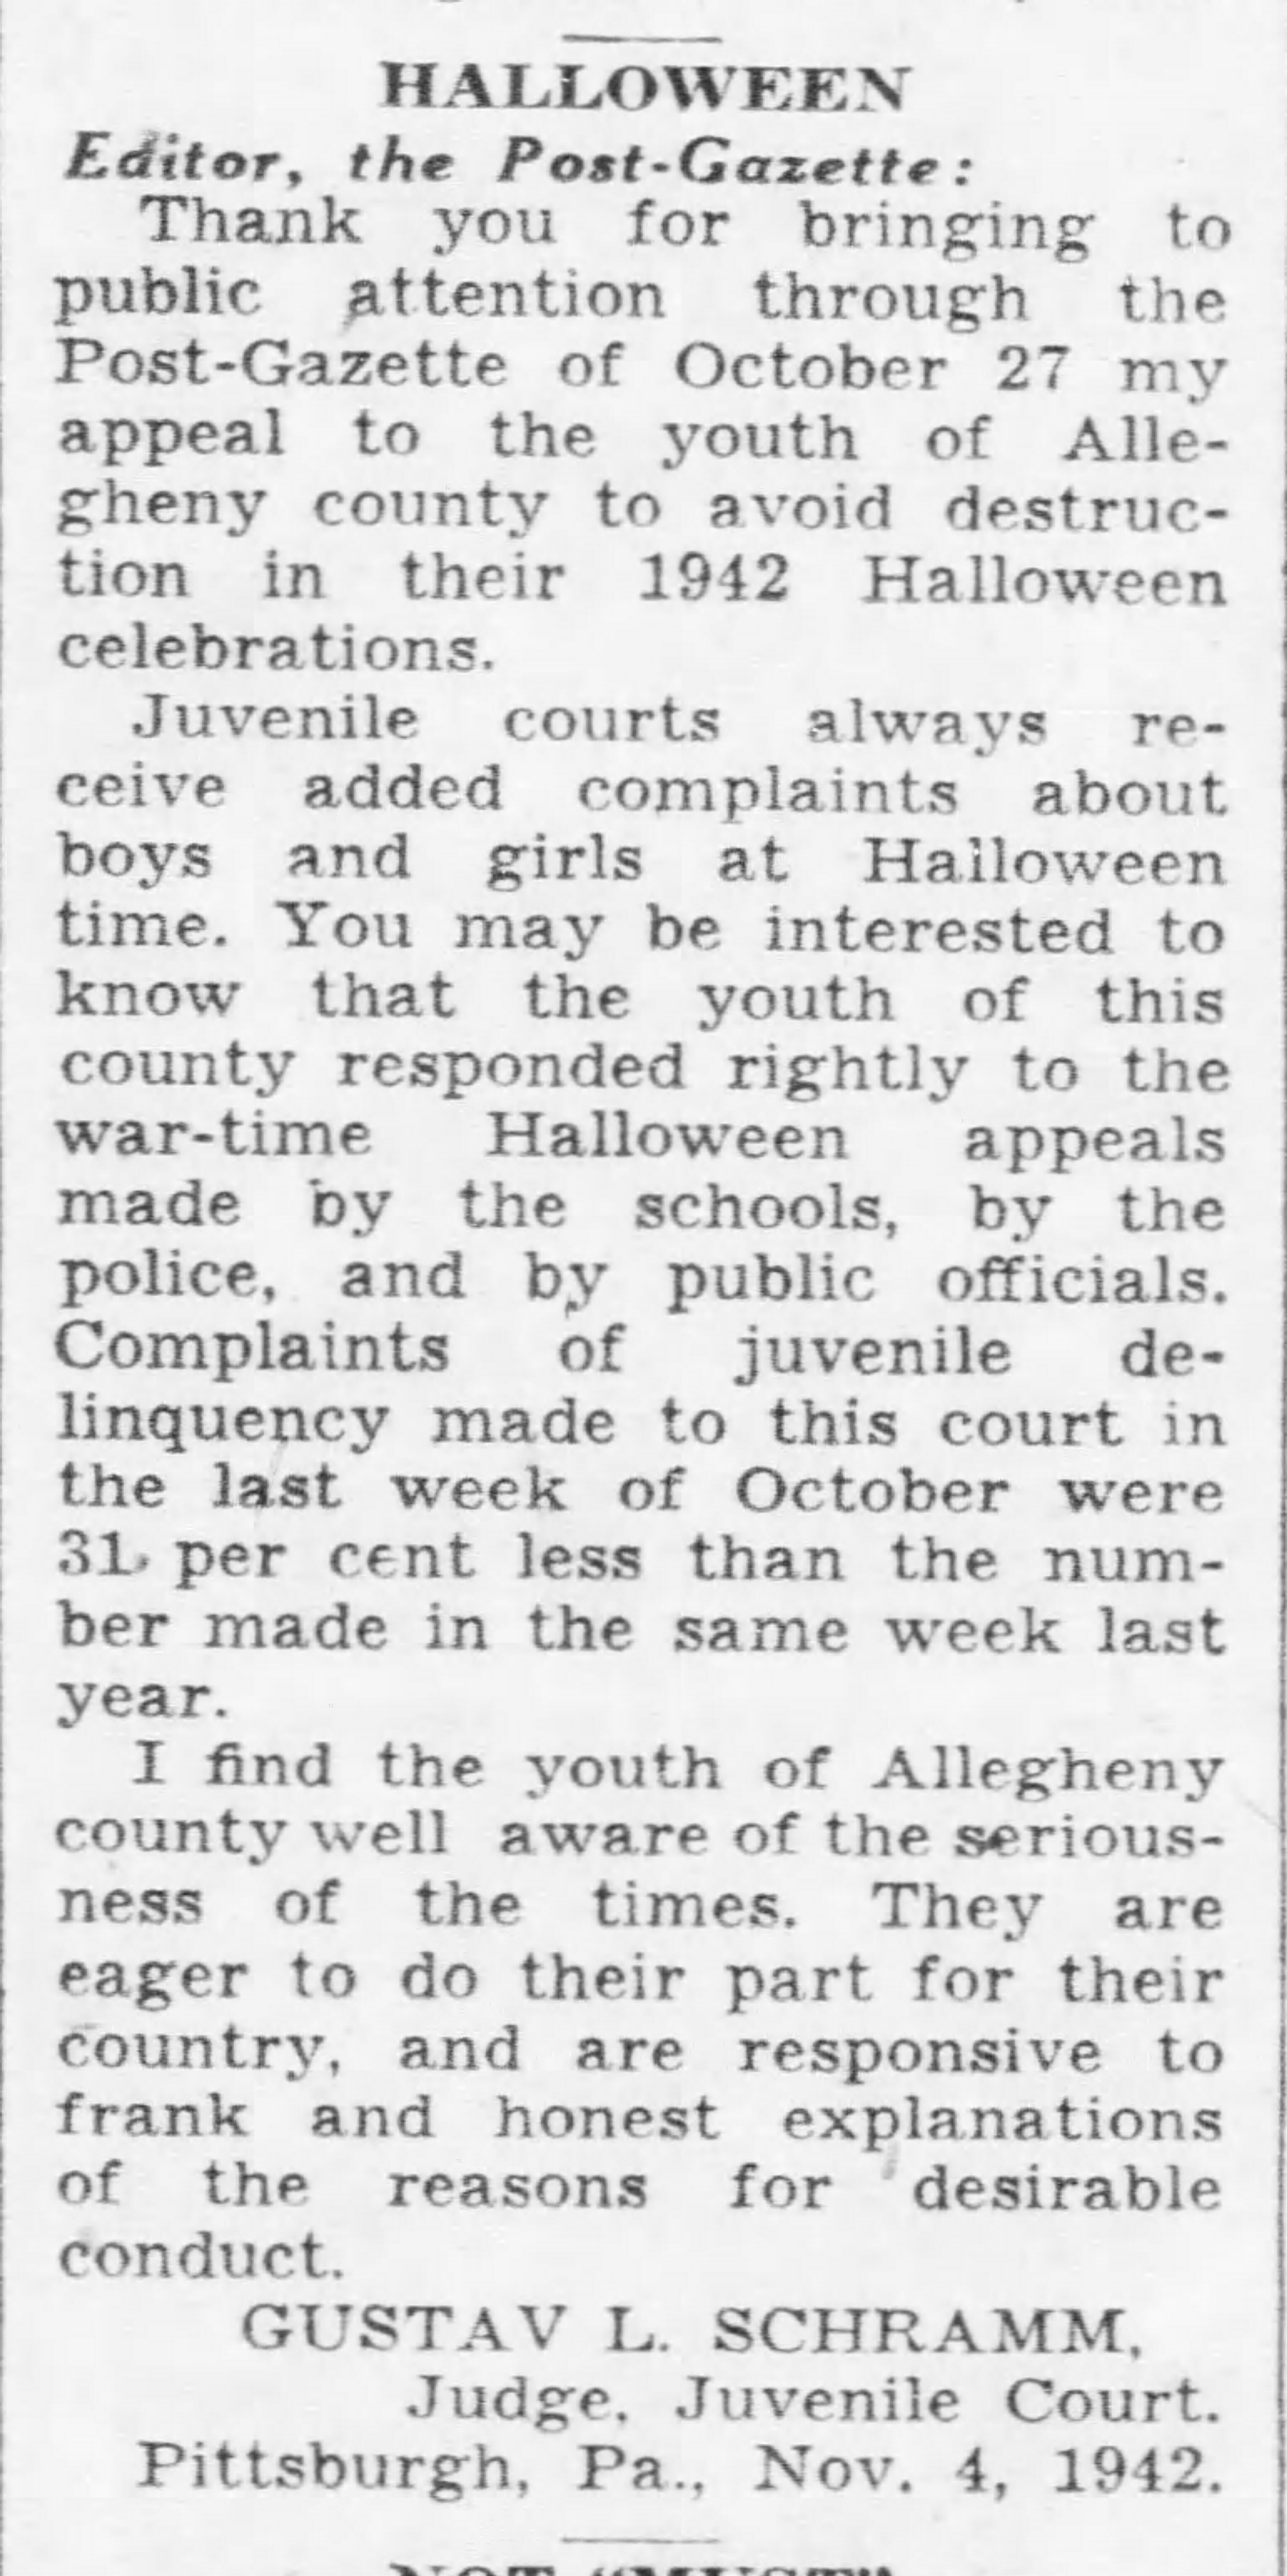 “Halloween,” Letter to the Editor from Juvenile Court Judge Gustav L. Schramm praising the response of local children, Pittsburgh Post-Gazette, November 9, 1942.